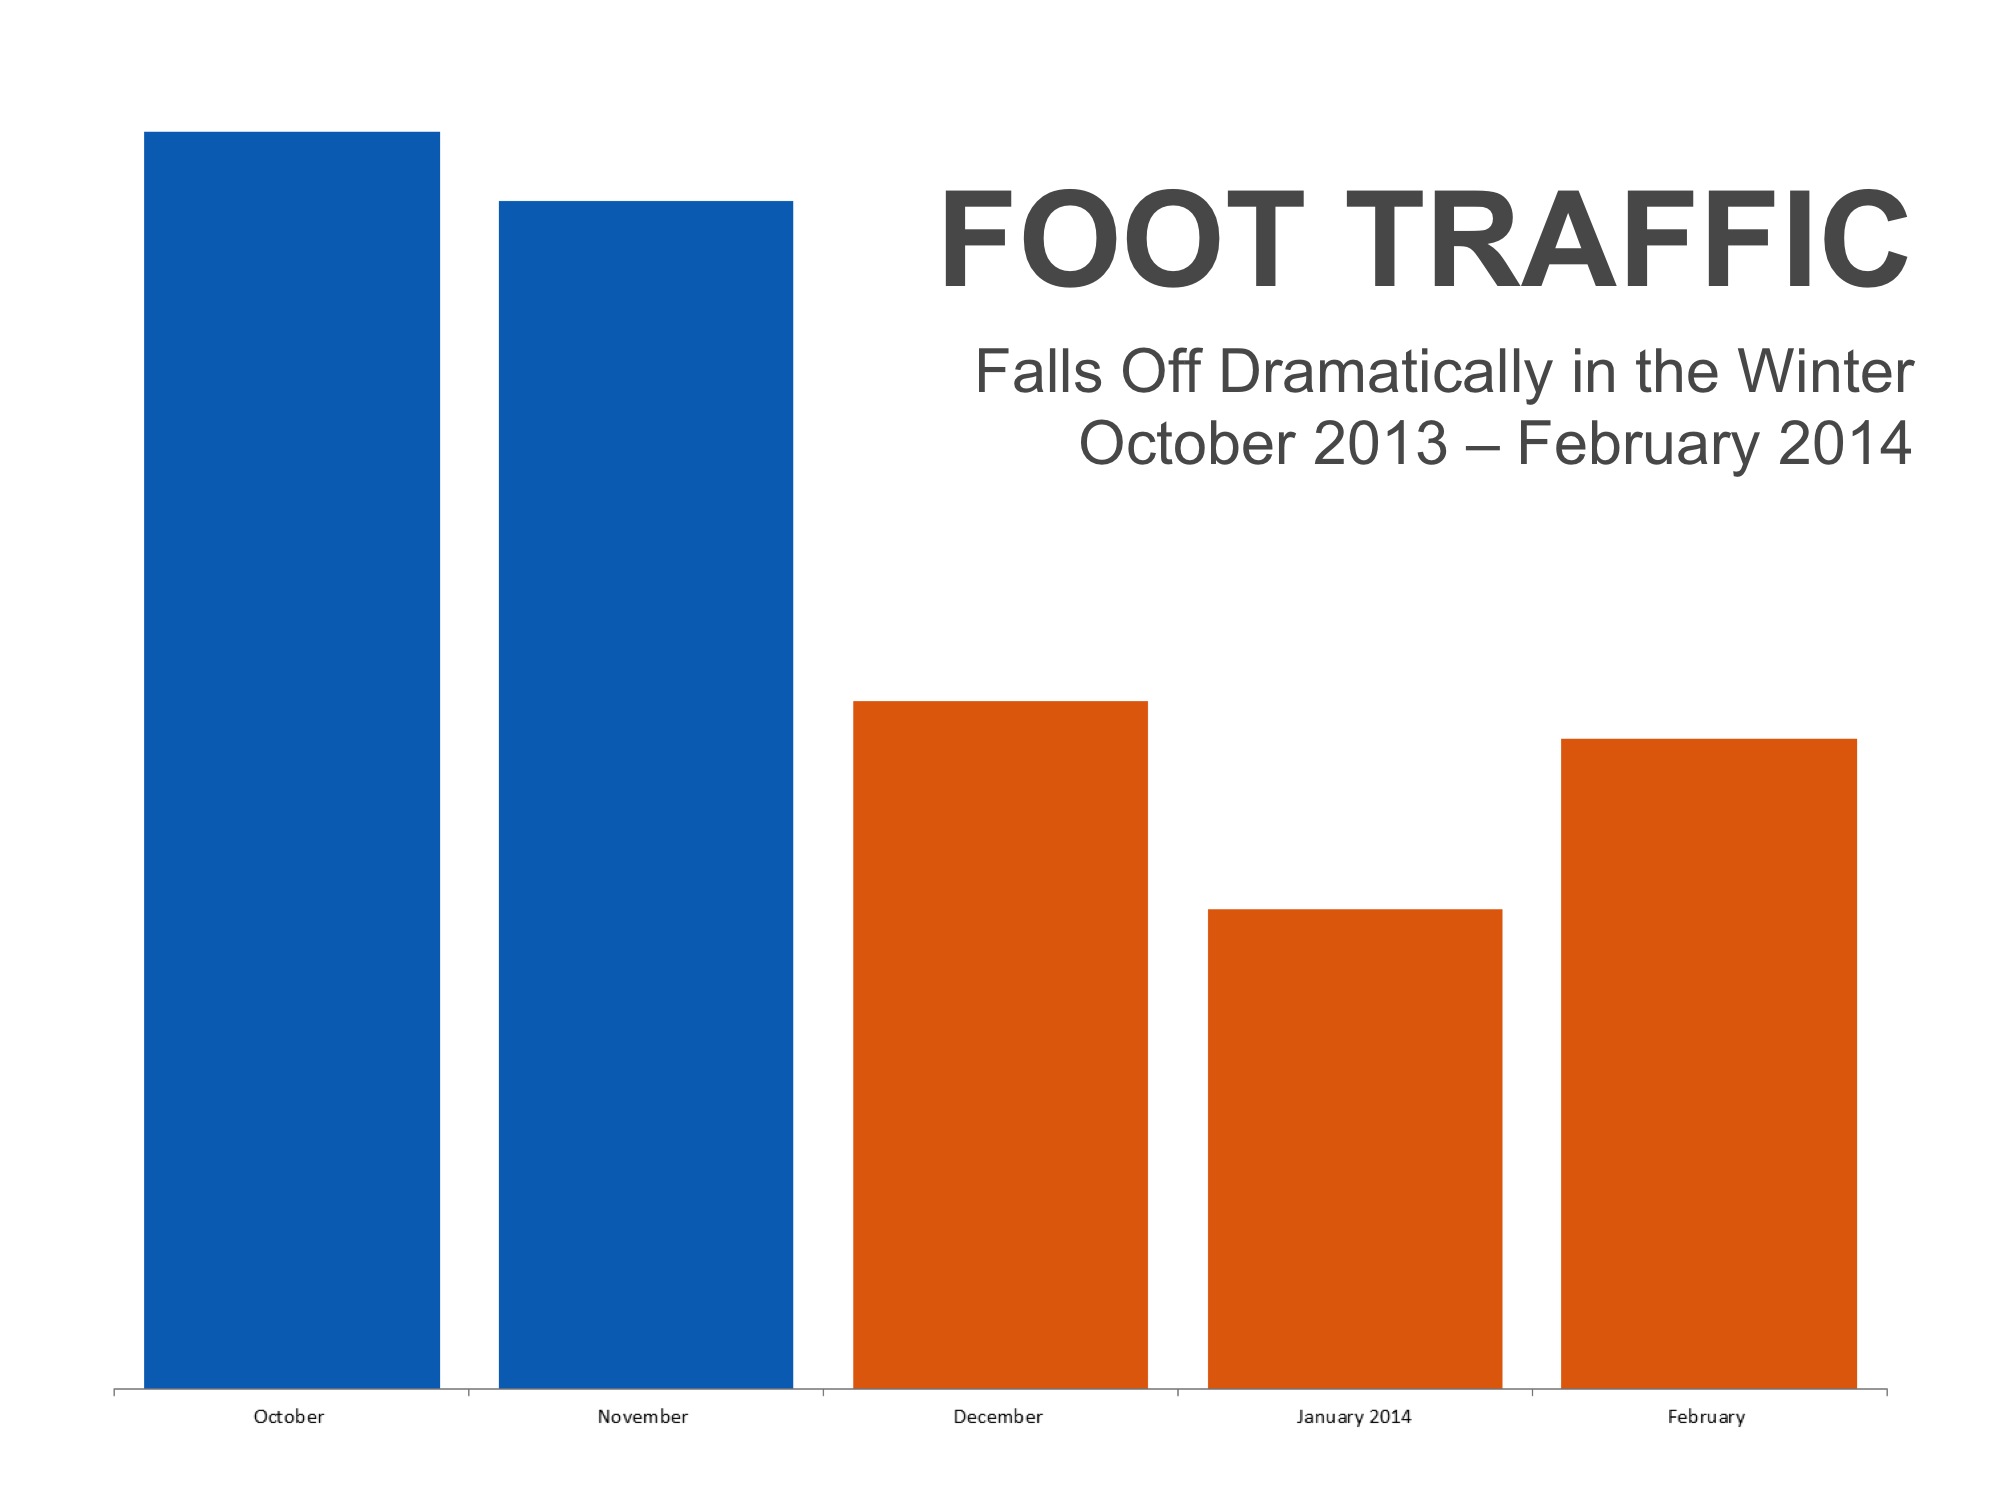 Foot Traffic to Decline in Winter Months